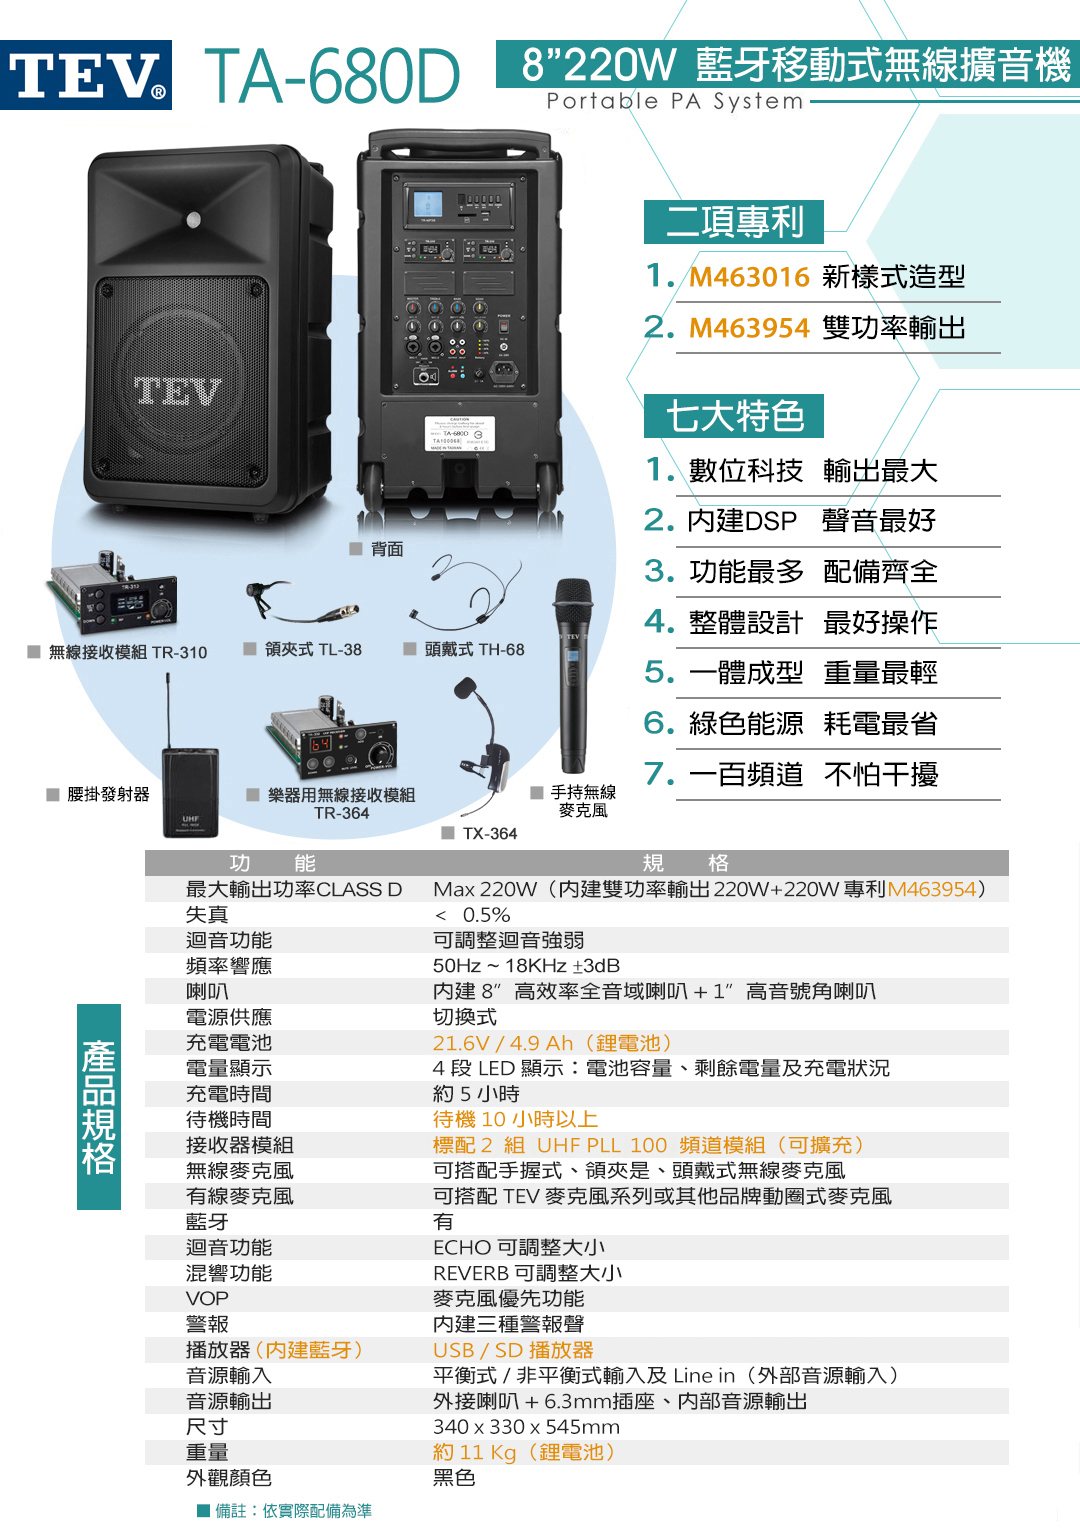 TA-60D 220W 藍牙移動式無線擴音機Portable PA SystemTEV00000二項專利1.M463016 新樣式造型2. M463954 雙功率輸出七大特色1.數位科技 輸出最大2.DSP 聲音最好 背面3.功最多 配備齊全4.整體設計 最好操作 無線接收模組 TR-310  式 TL-38 頭戴式 TH-685.一體成型 重量最輕6.綠色能源 耗電最省7.一百頻道 不怕干擾TB-300 樂器用無線接收模組TM-8100TR-364TX-364功能規 格最大輸出功率CLASS D失真迴音功能頻率響應喇叭電源供應充電電池電量顯示充電時間待機時間接收器模組無線麥克風有線麥克風藍牙迴音功能混響功能VOP警報播放器(藍牙)音源輸入音源輸出尺寸重量Max 220W(內建雙功率輸出220W+220W專利M463954) 0.5%可調整迴音強弱50Hz~18KHz±3dB內建8高效率全音域喇叭+1高音號角喇叭切換式11.1V/5200mAh(電池)x24 段 LED 顯示:電池容量、剩餘電量及充電狀況約5小時待機10小時以上標配2 組 UHF PLL 100 頻道模組(可擴充)可搭配手握式、領夾是、頭戴式無線麥克風可搭配 TEV 麥克風系列或其他品牌動圈式麥克風有ECHO 可調整大小REVERB 可調整大小麥克風優先功能内建三種警報聲USB/SD 播放器平衡式/非平衡式輸入及 Line in(外部音源輸入)外接喇叭+6.3mm插座、內部音源輸出340 x 330 x 545mm約 11 (鋰電池)外觀顏色黑色 備註:依實際配備為準